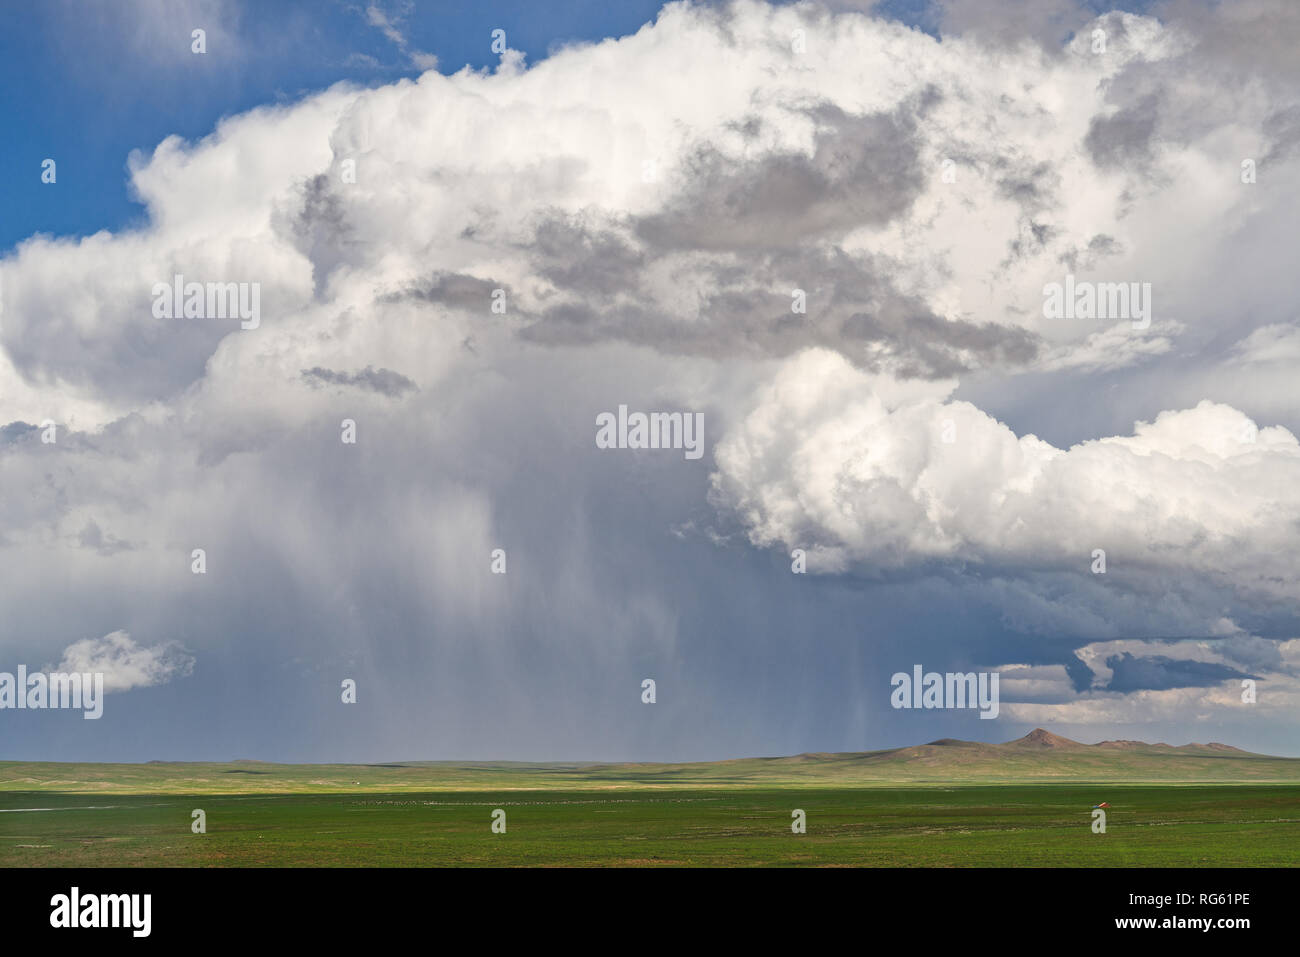 Summer rain over plains, Mongolia Stock Photo